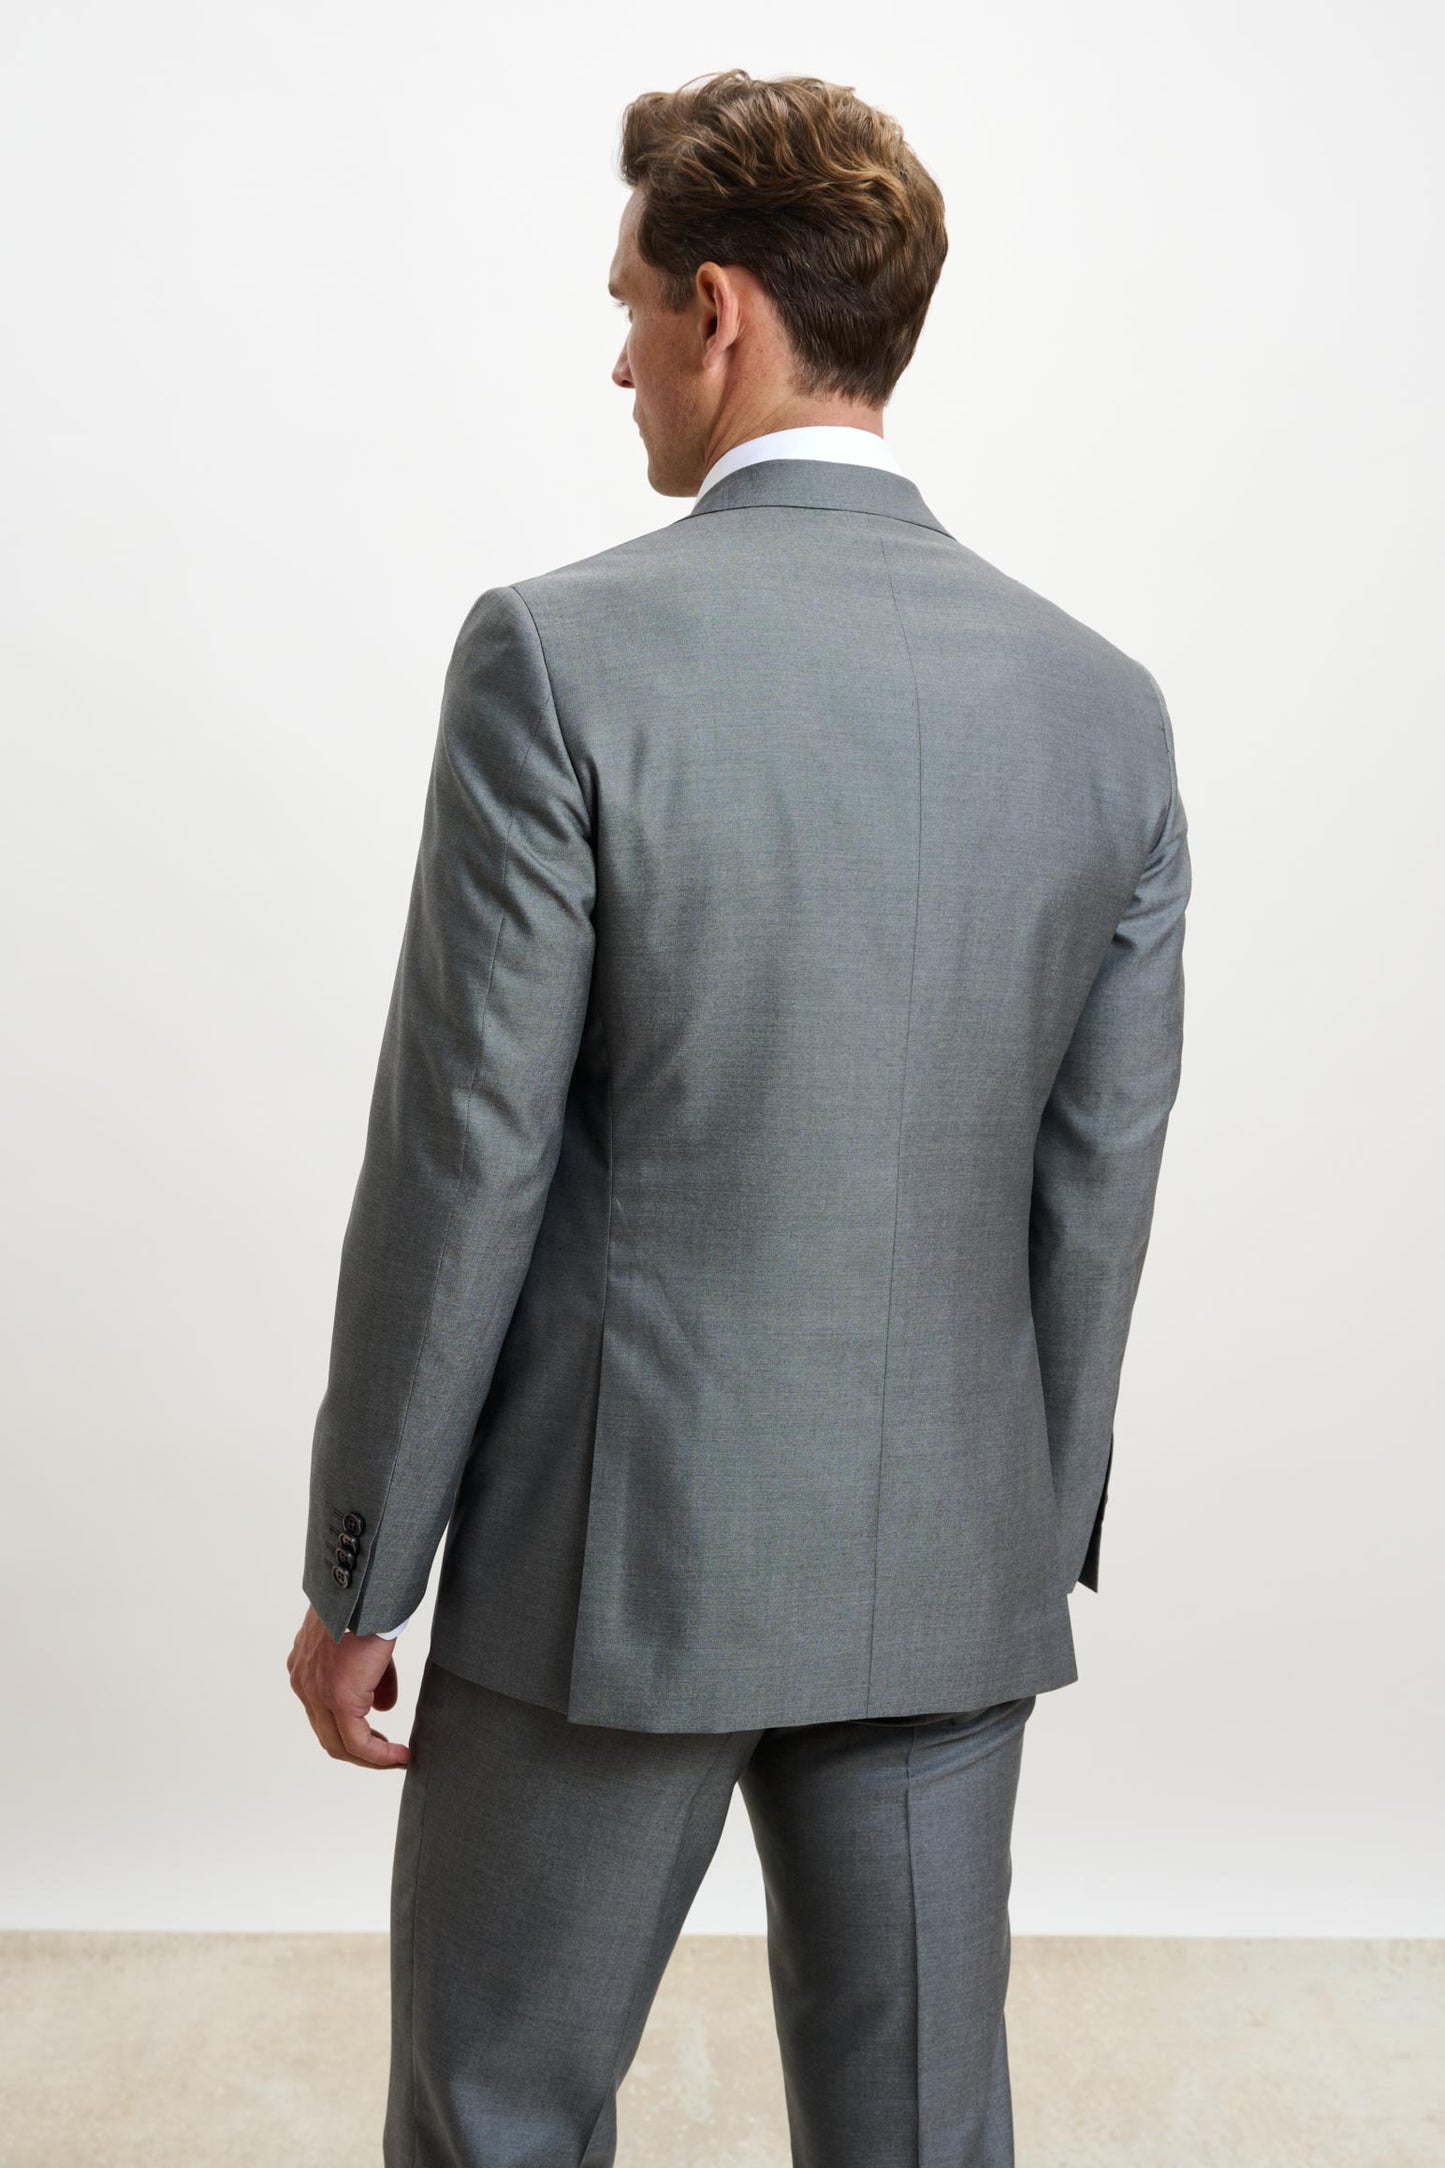 Kenton Suit Sleek Plain Light Grey